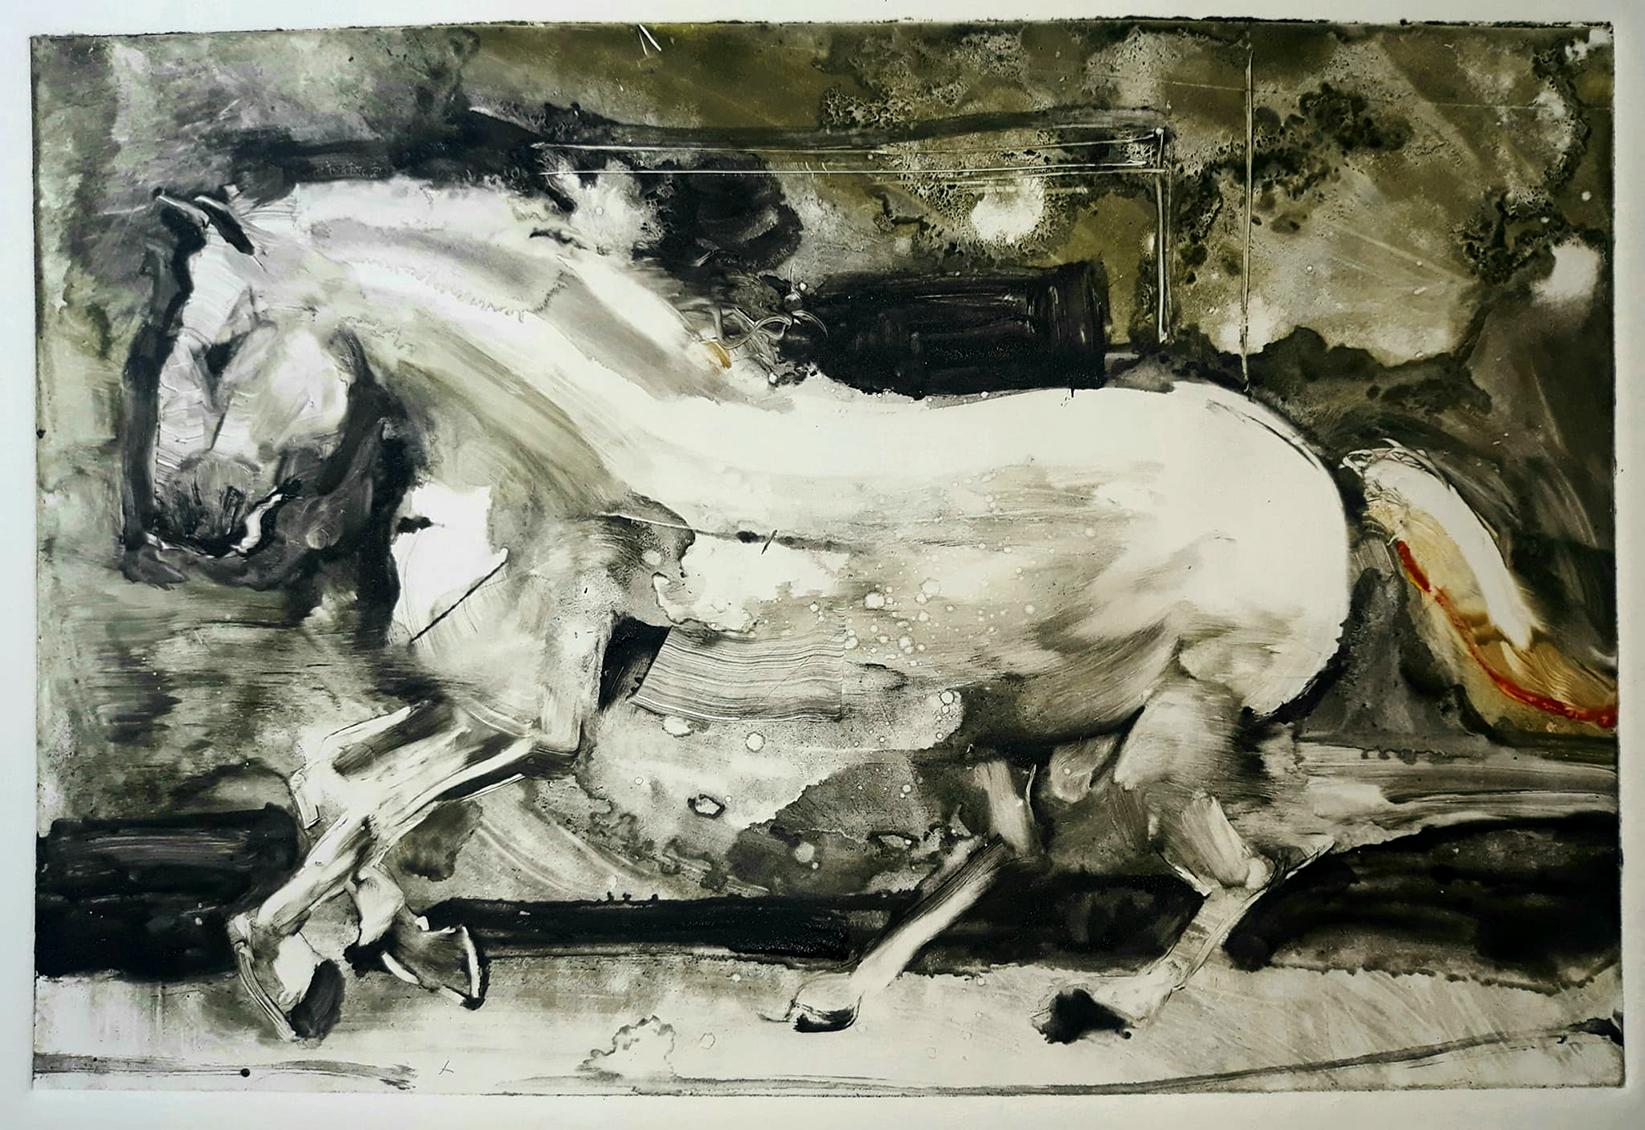 Tom Bennett Animal Art - Lusitano #1, monochromatic horse black and white, dramatic